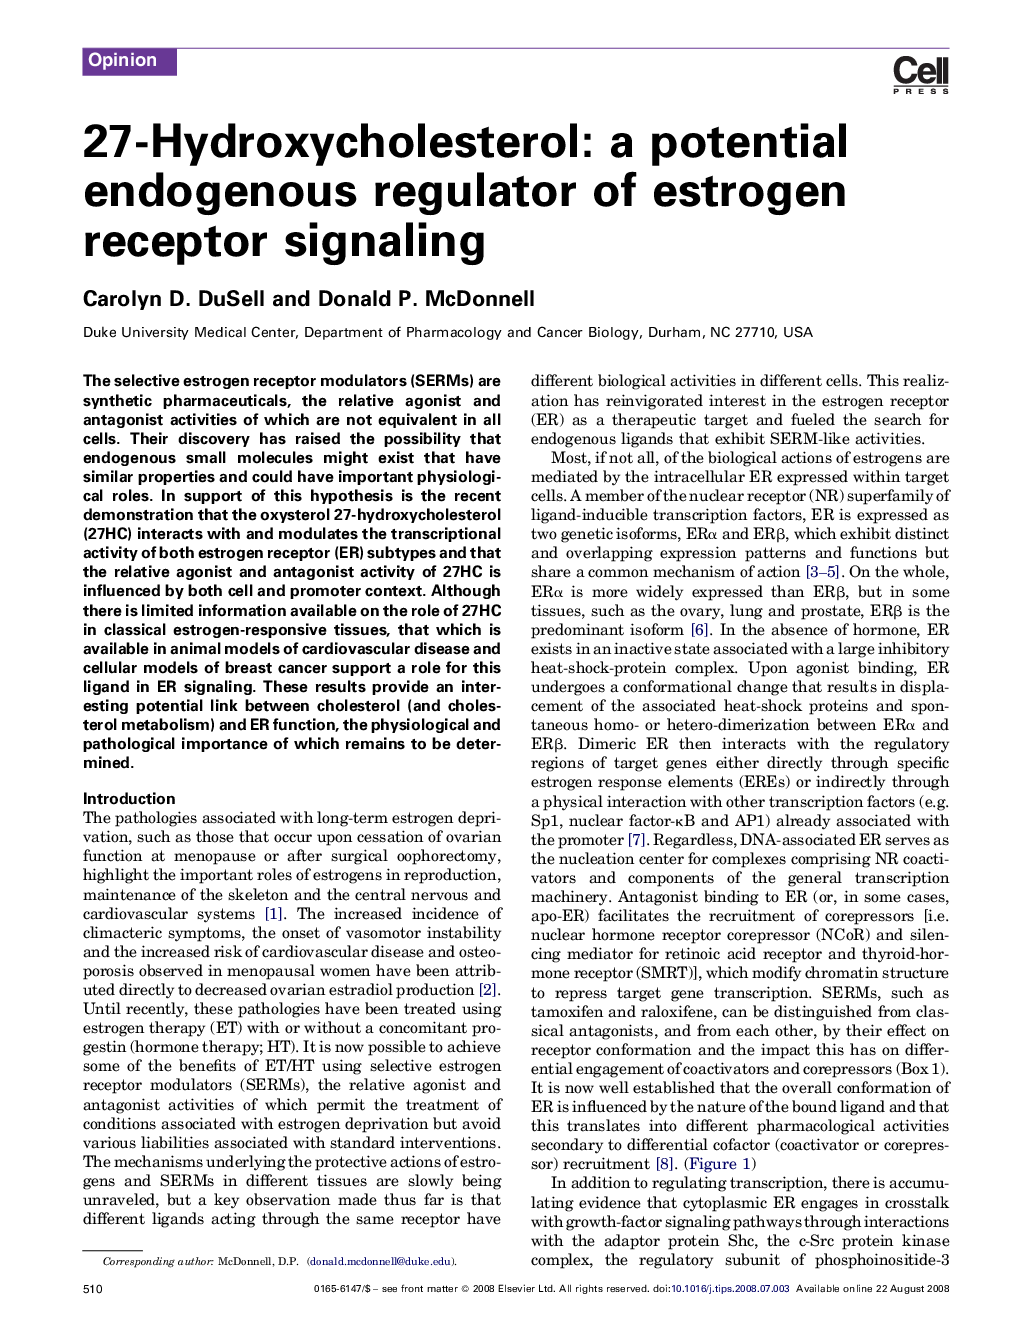 27-Hydroxycholesterol: a potential endogenous regulator of estrogen receptor signaling